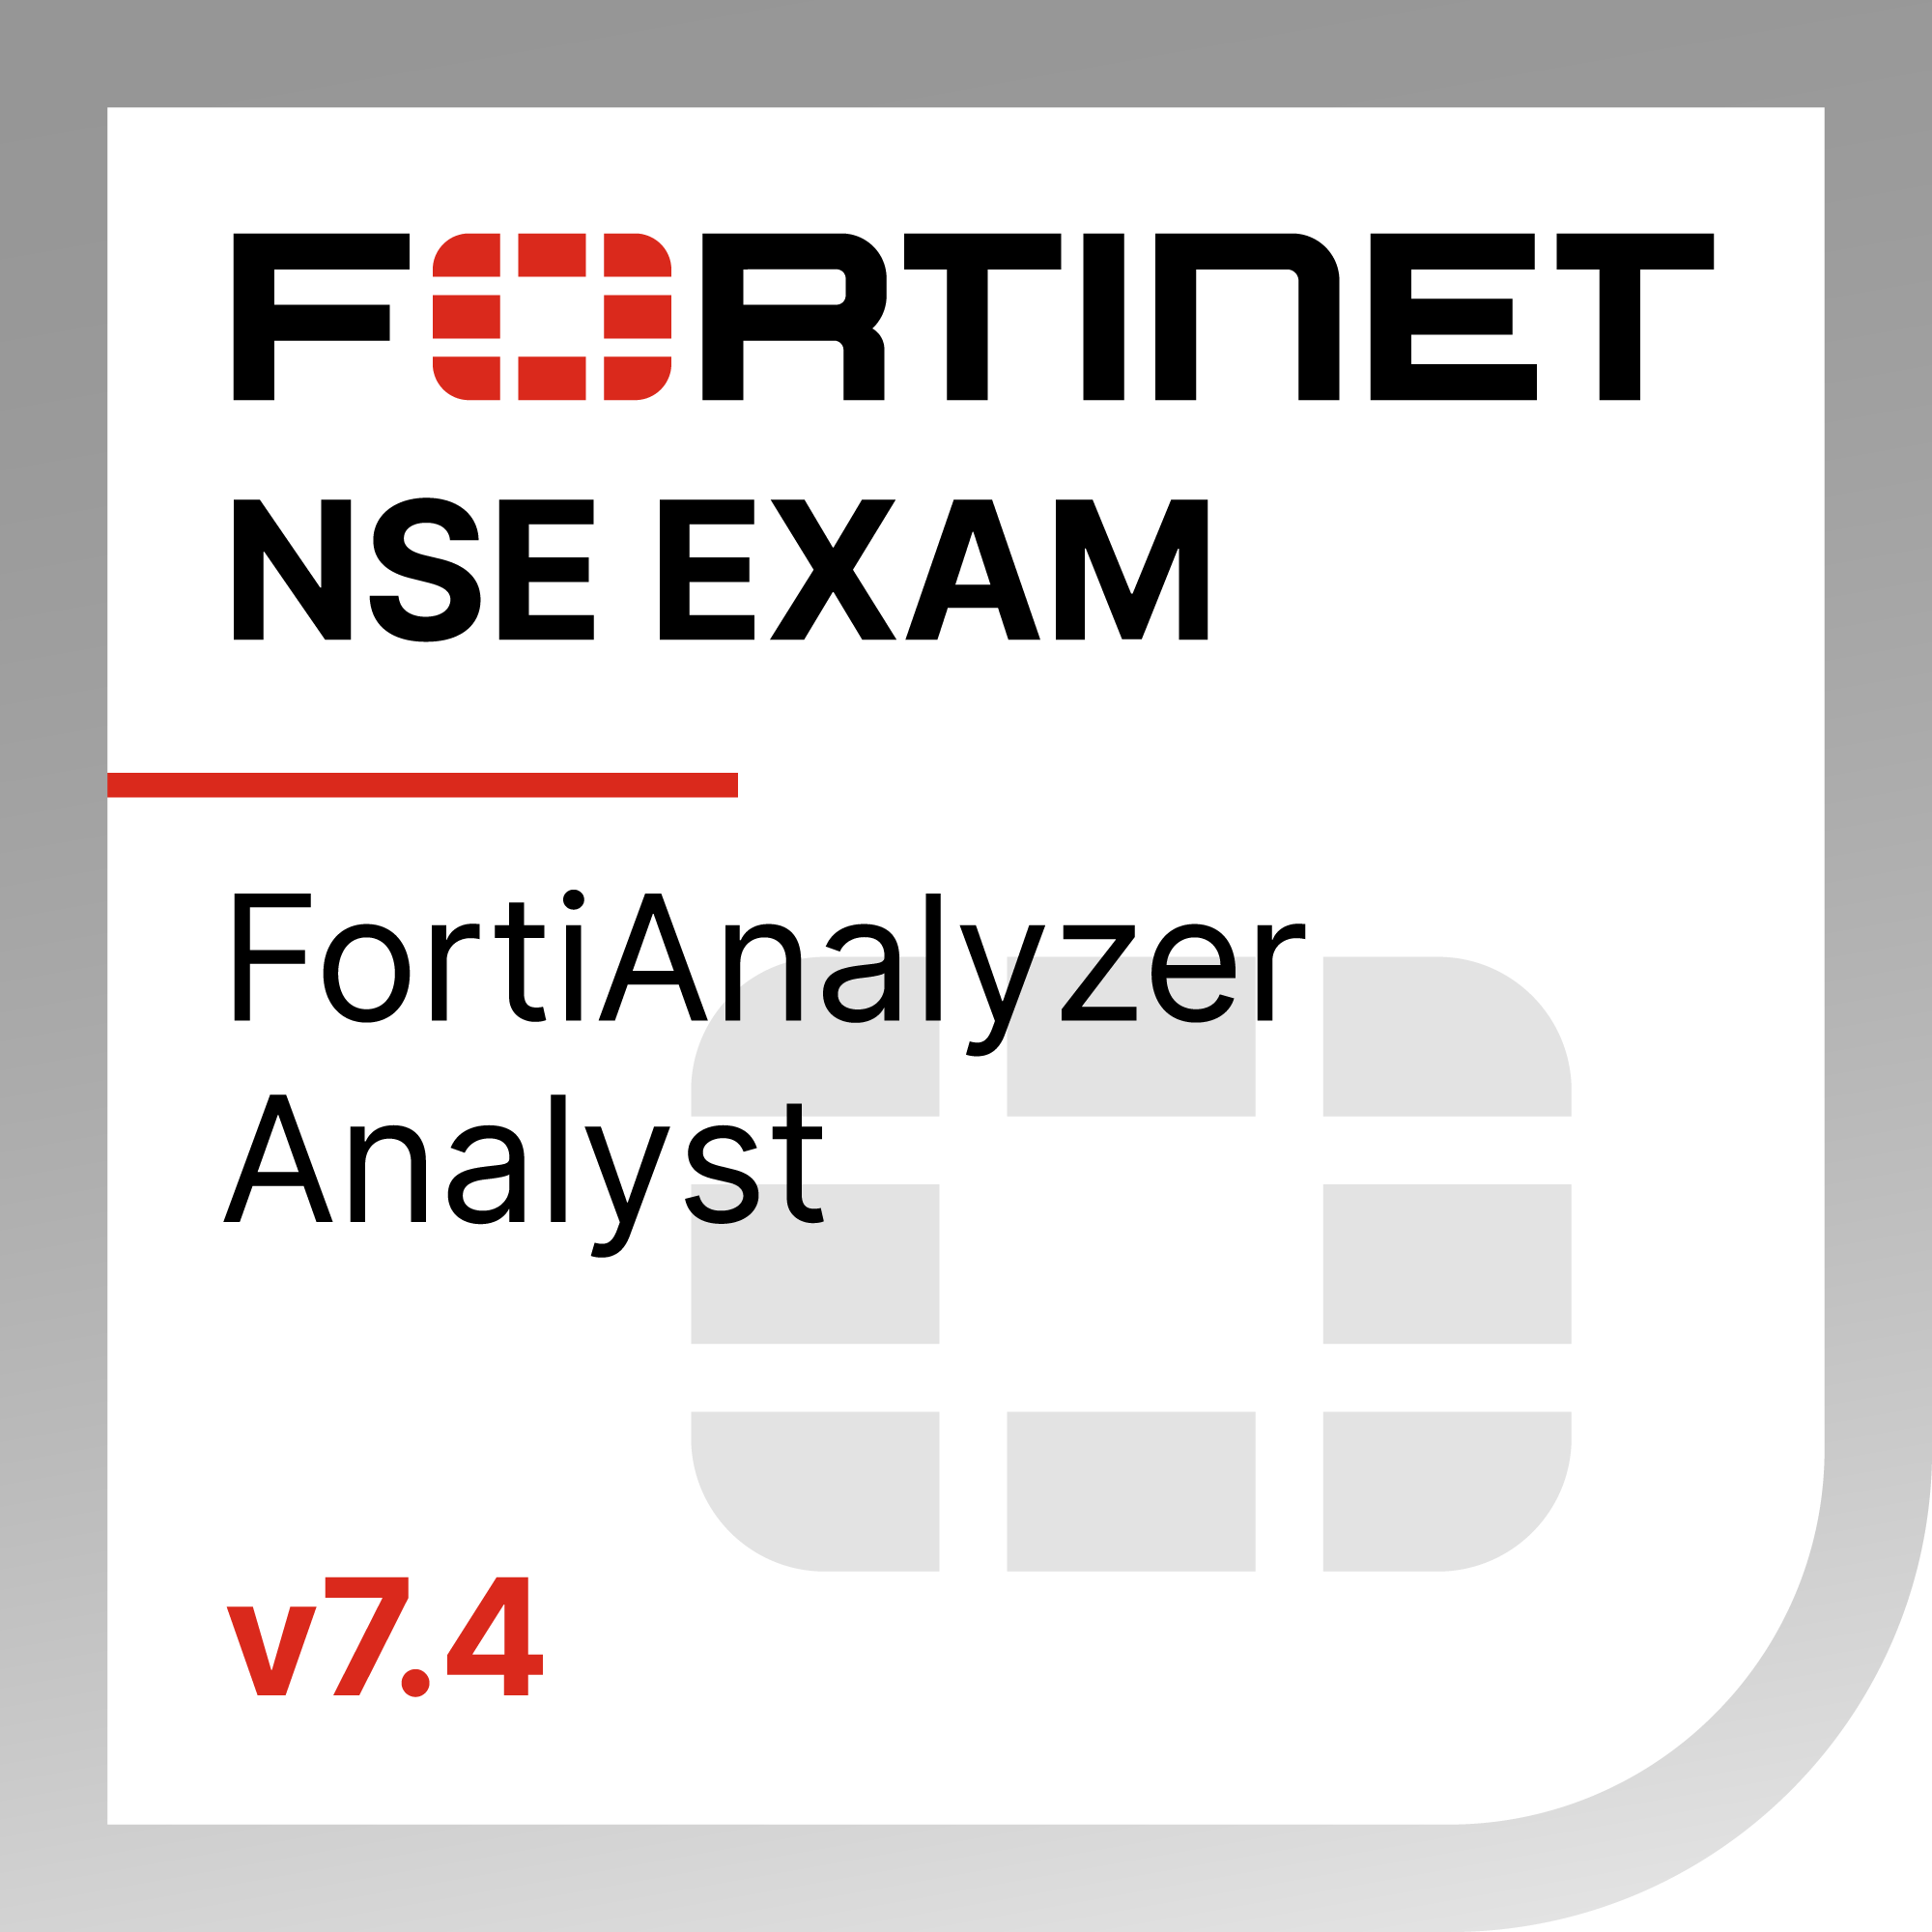 FortiAnalyzer 7.4 Analyst exam badge